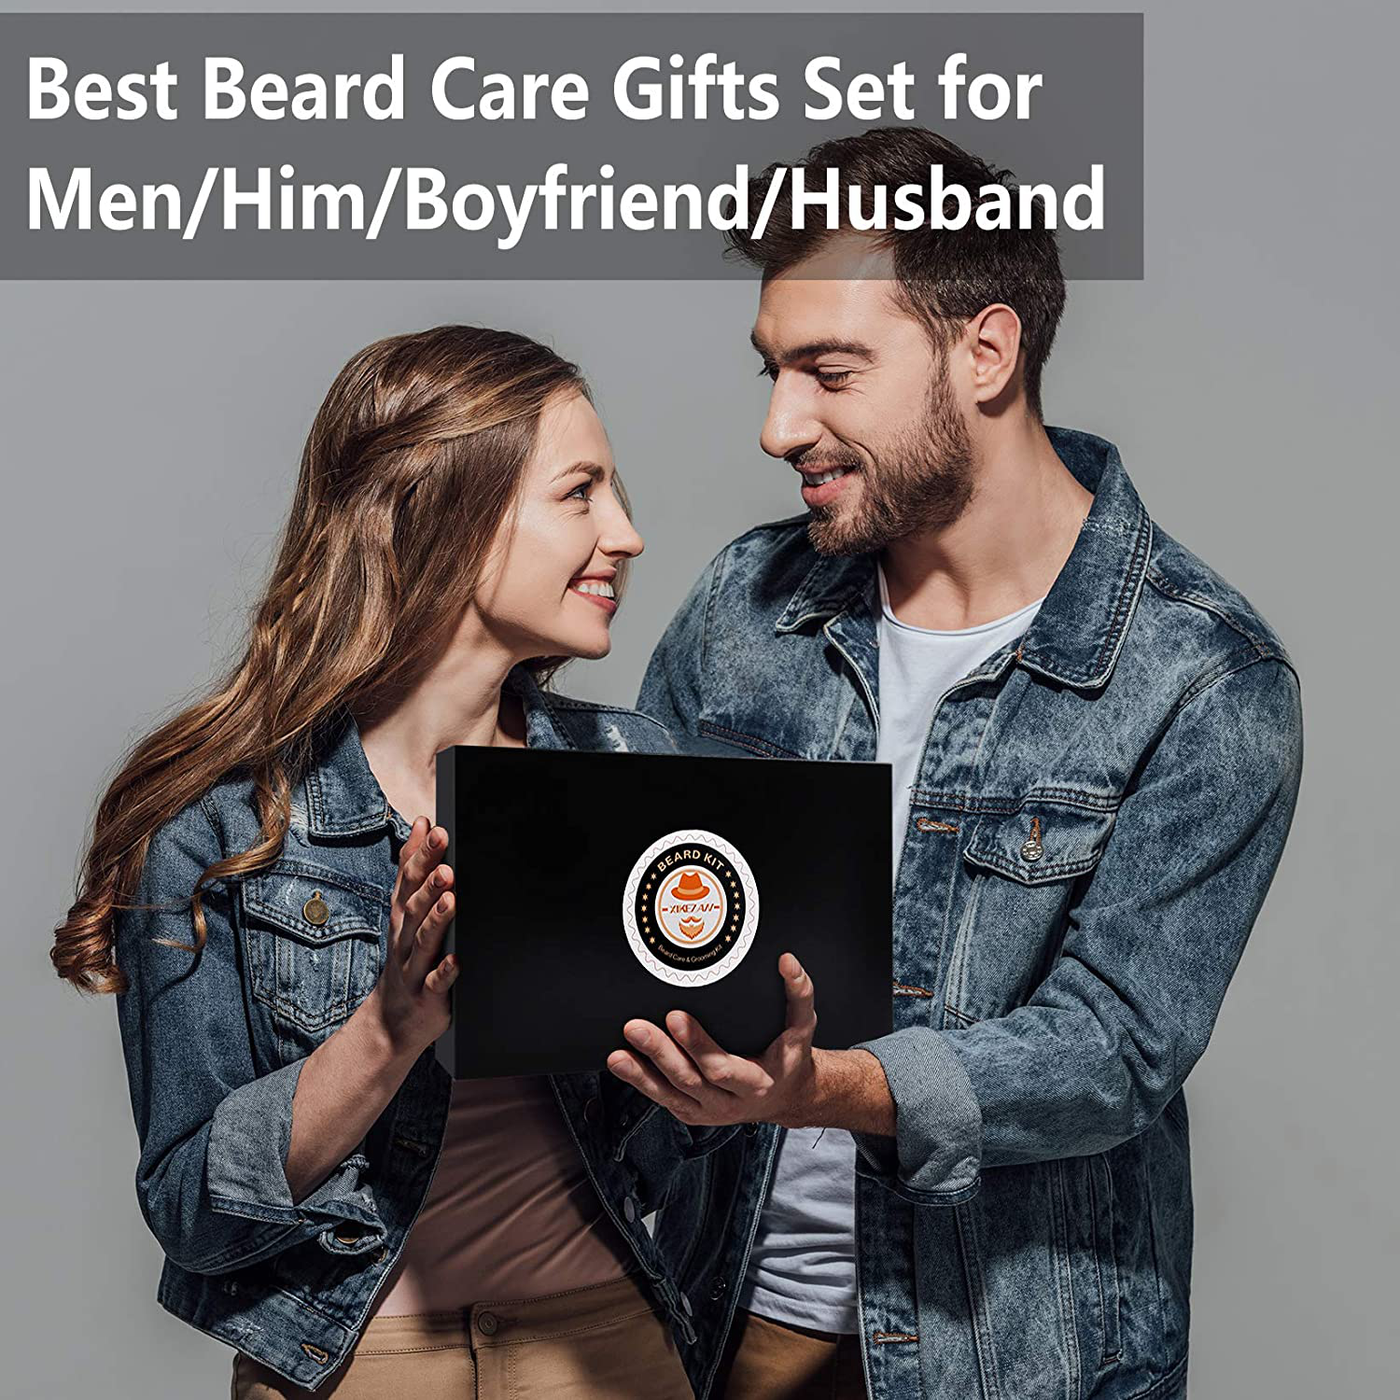 Upgraded Beard Grooming Kit w/Beard Conditioner,Beard Oil,Beard Balm,Beard Brush,Beard Shampoo/Wash,Beard Comb,Beard Scissors,Storage Bag,Beard E-Book,Beard Growth Care Gifts for Men